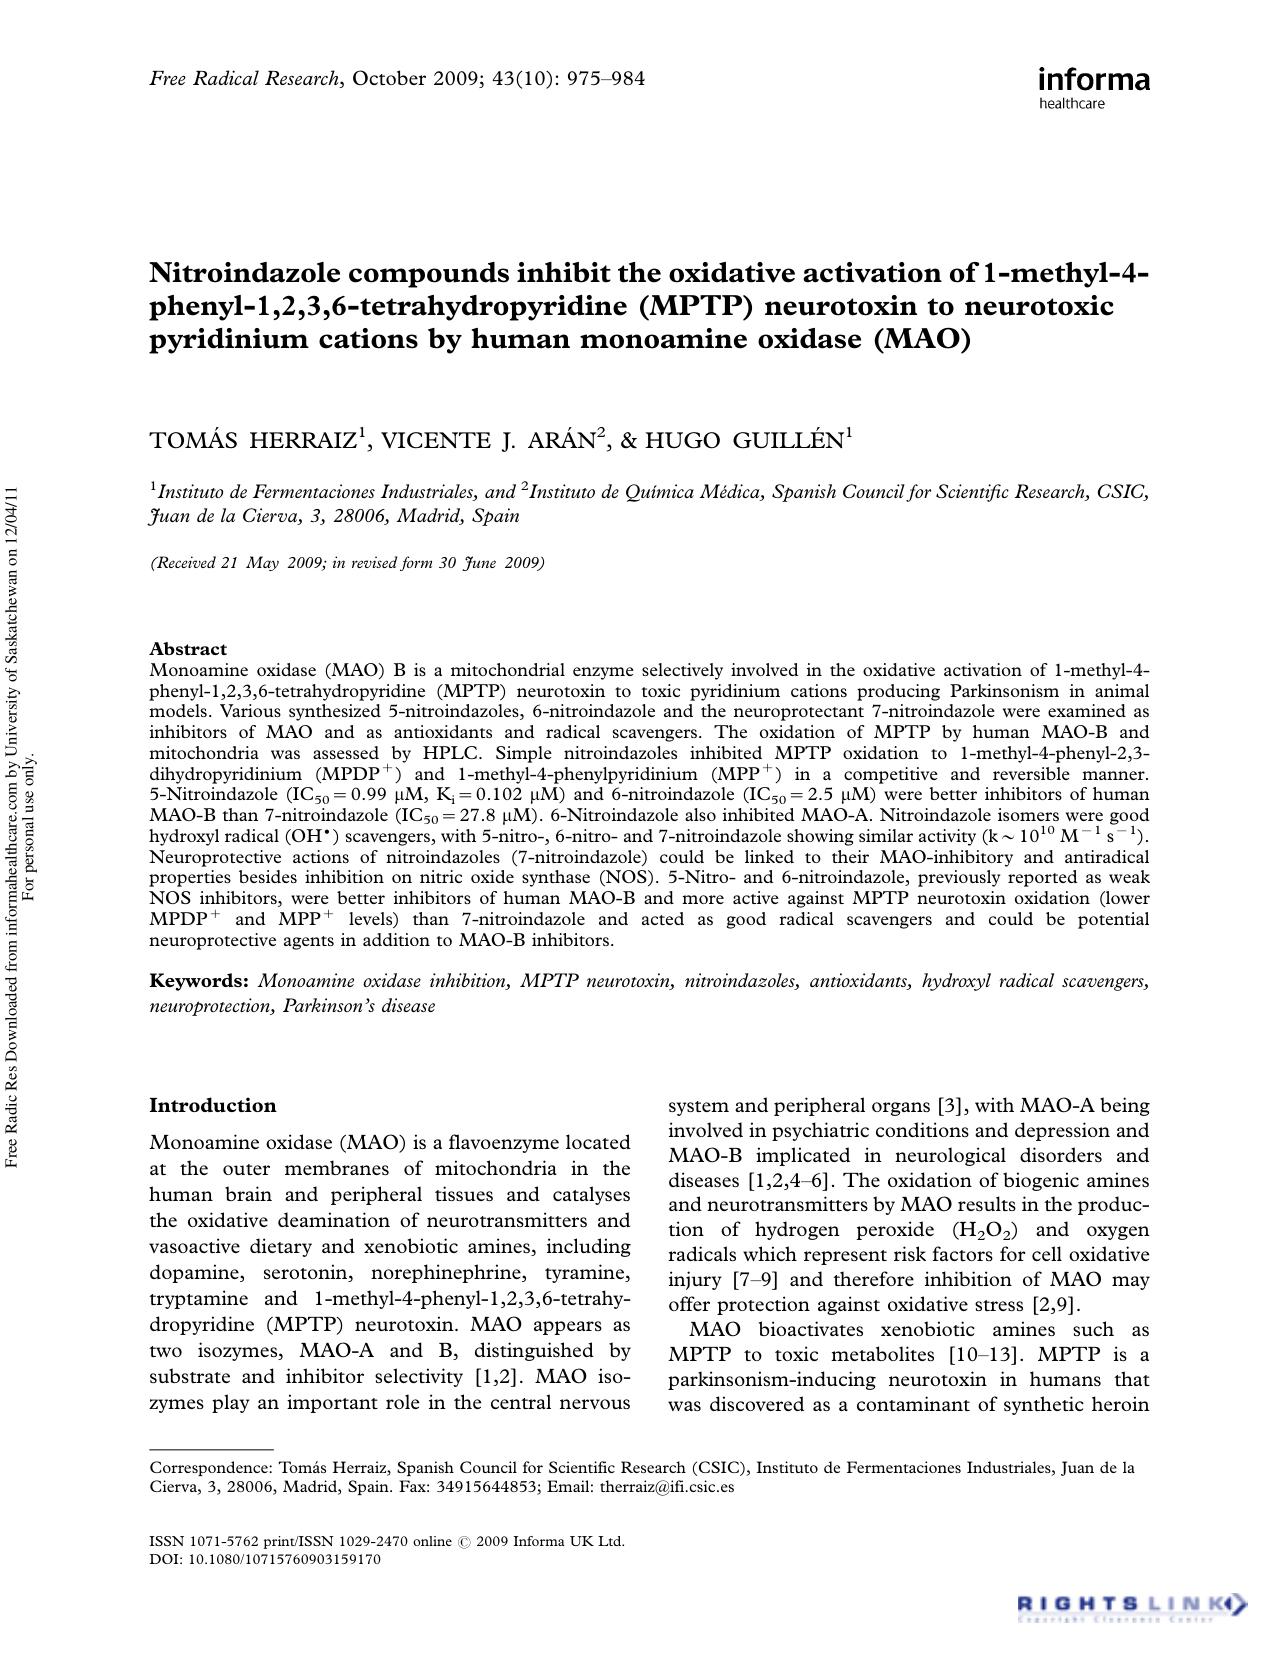 Nitroindazole compounds inhibit the oxidative activation of 1-methyl-4-phenyl-1,2,3,6-tetrahydropyridine (MPTP) neurotoxin to neurotoxic pyridinium cations by human monoamine oxidase (MAO) by Tomás Herraiz1* Vicente J. Arán2 Hugo Guillén1